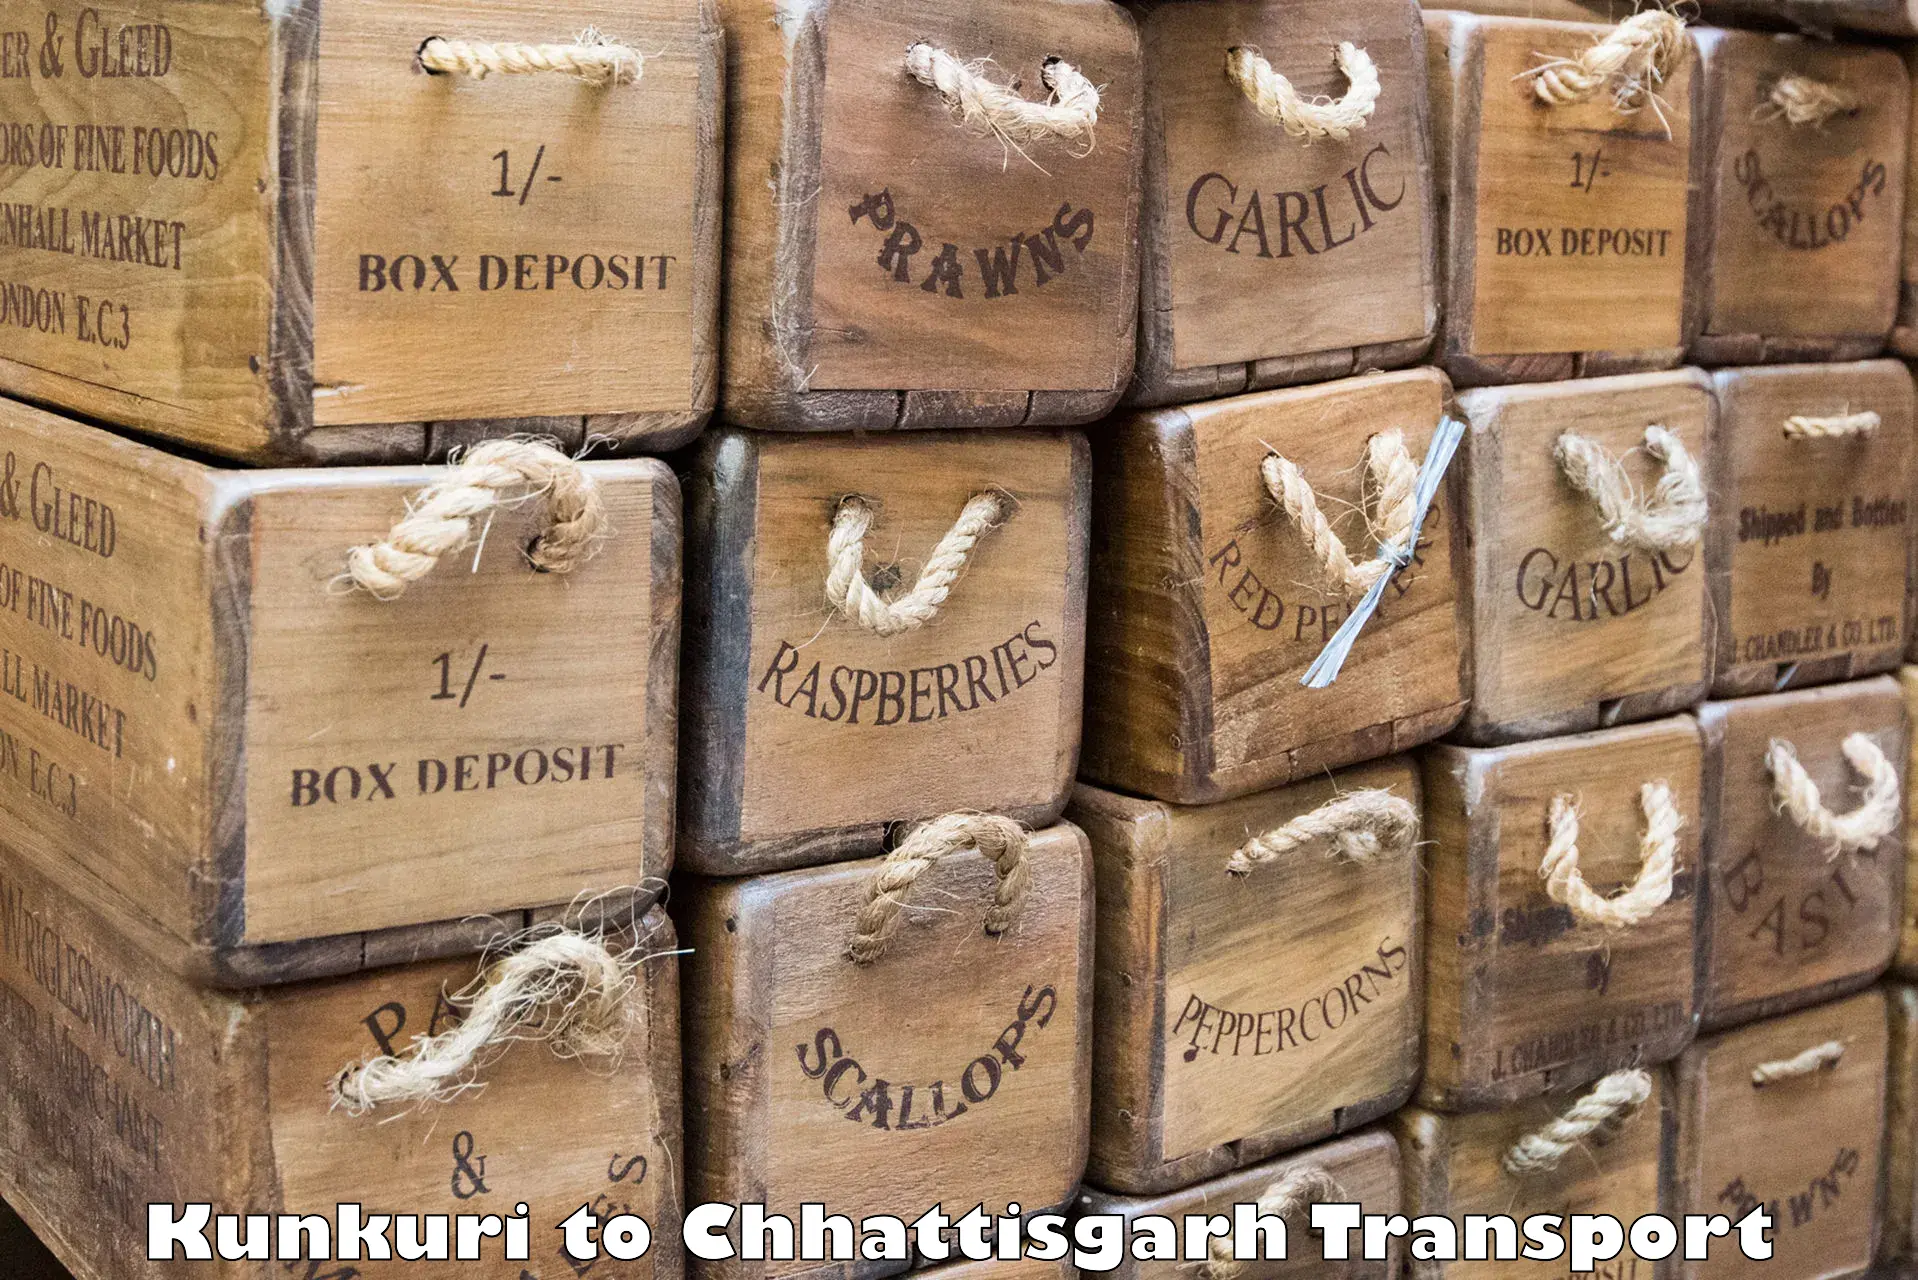 Container transport service Kunkuri to Korea Chhattisgarh